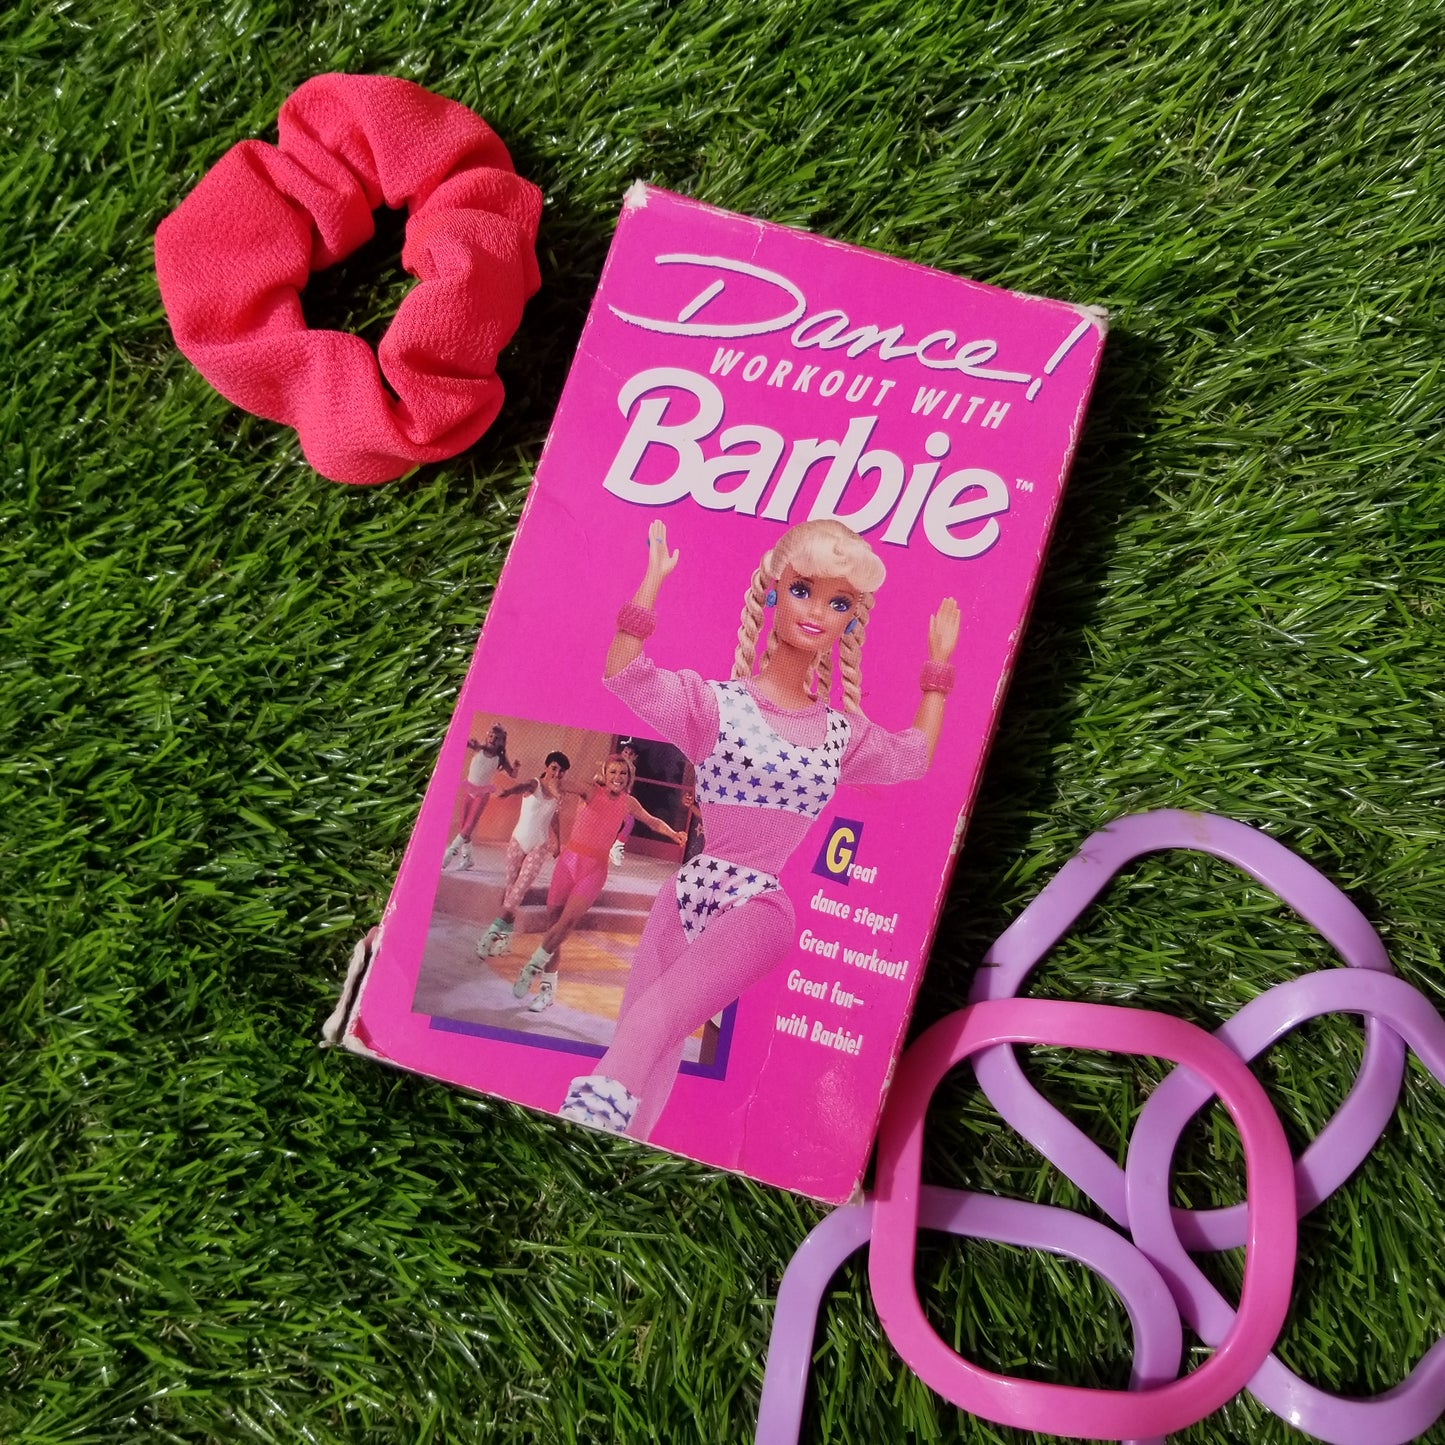 Barbie Aerobics VHS tape